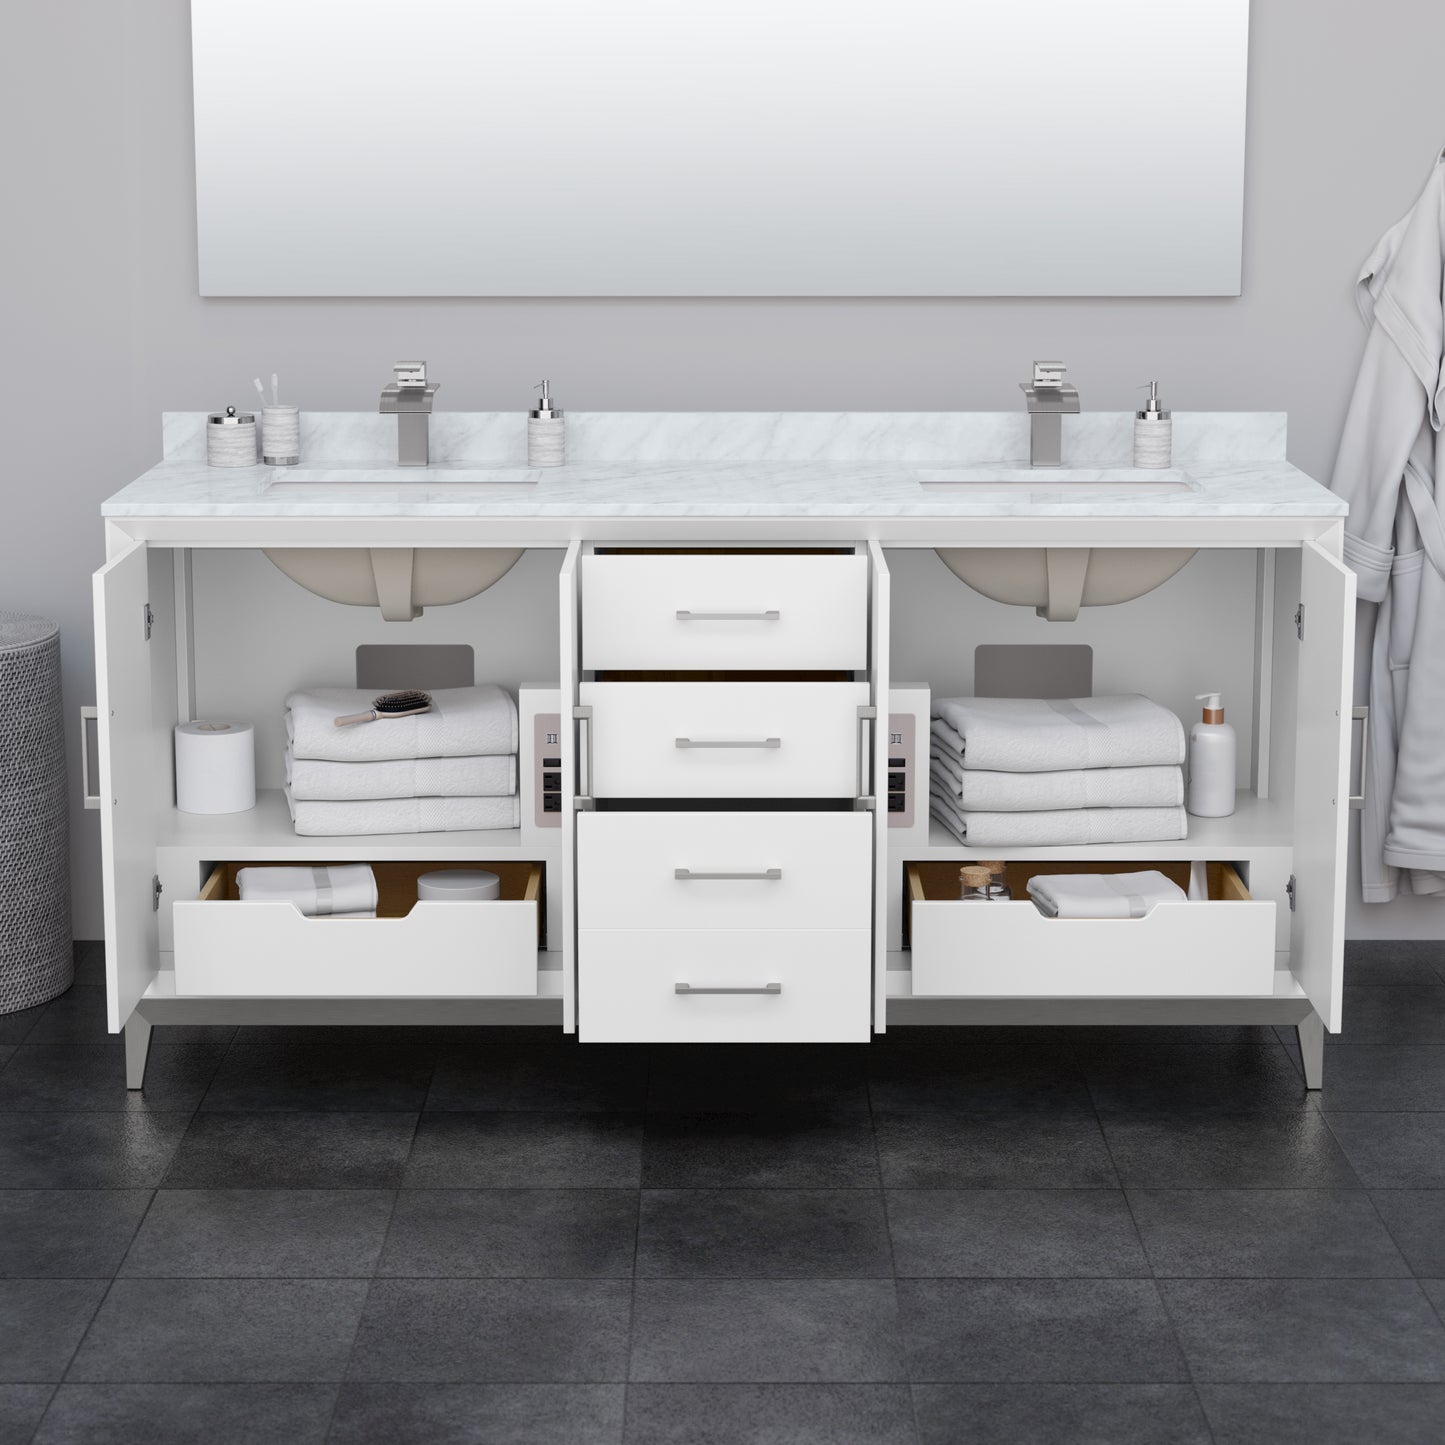 Amici 72" Double Bathroom Vanity in White, White Carrara Marble, Undermount Square Sink, Optional Trim